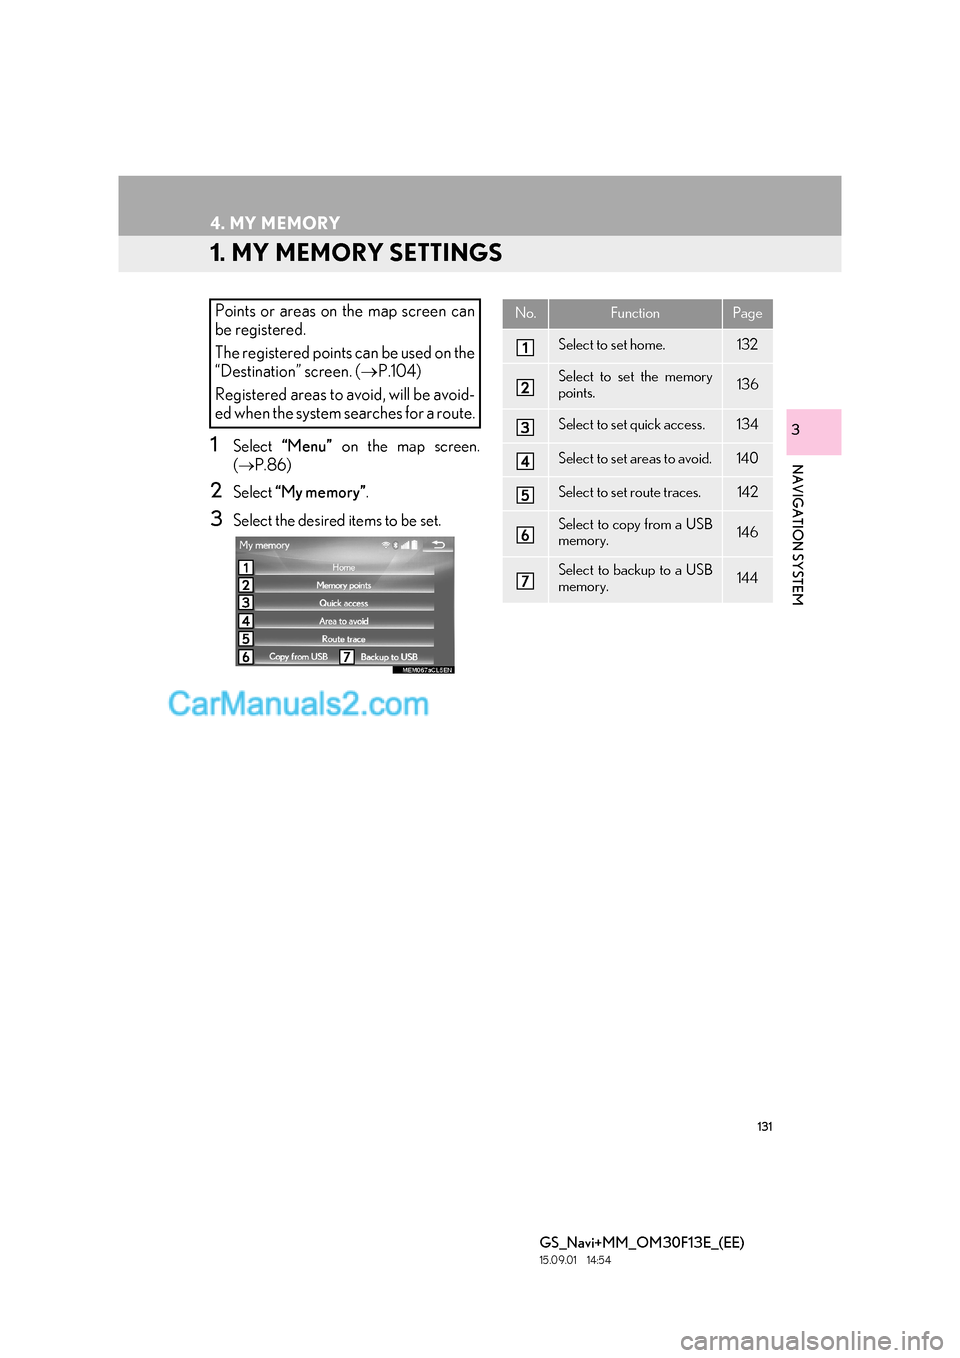 Lexus GS300h 2016  Navigation manual 131
GS_Navi+MM_OM30F13E_(EE)
15.09.01     14:54
NAVIGATION SYSTEM
3
4. MY MEMORY
1. MY MEMORY SETTINGS
1Select “Menu”  on the map screen.
( → P.86) 
2Select  “My memory” .
3Select the desire